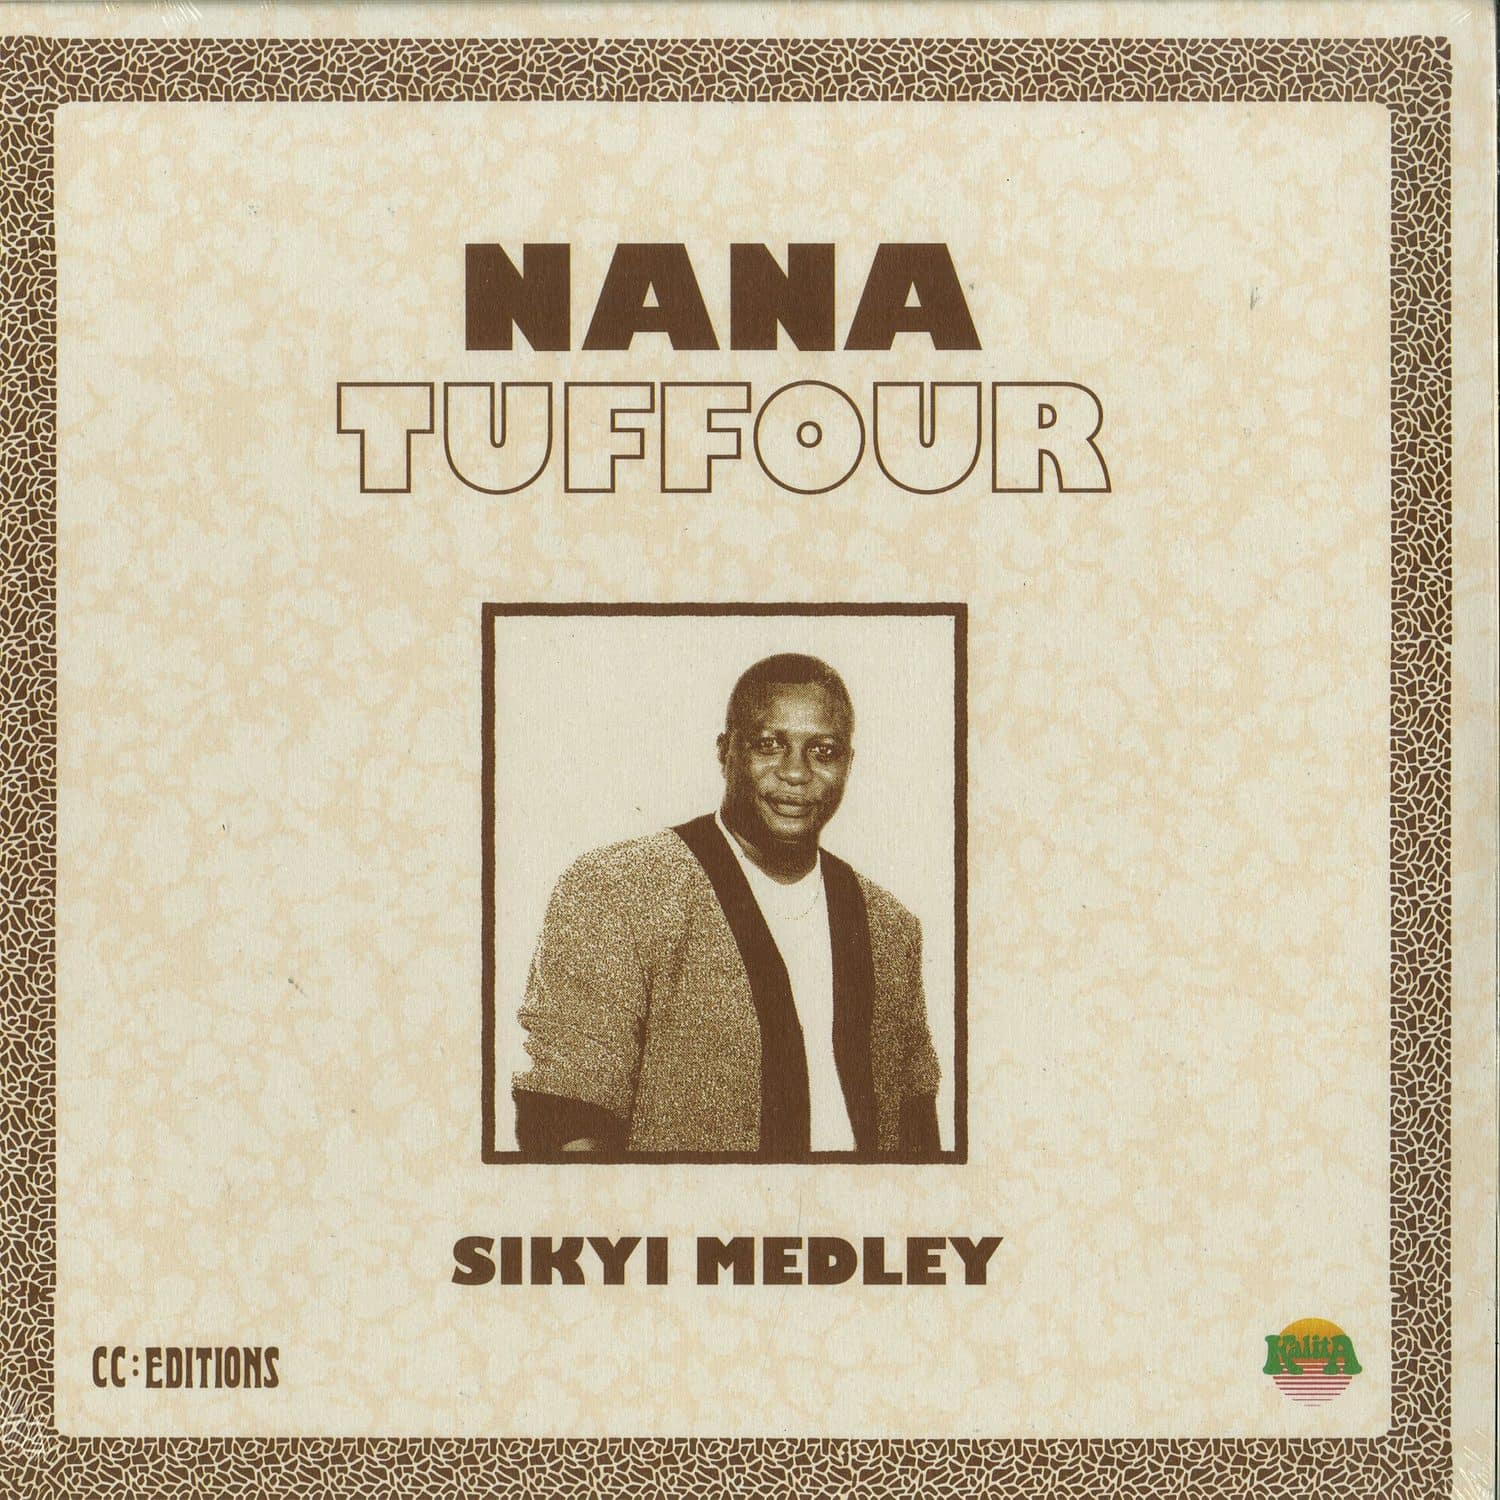 Nana Tuffour - SIKYI MEDLEY